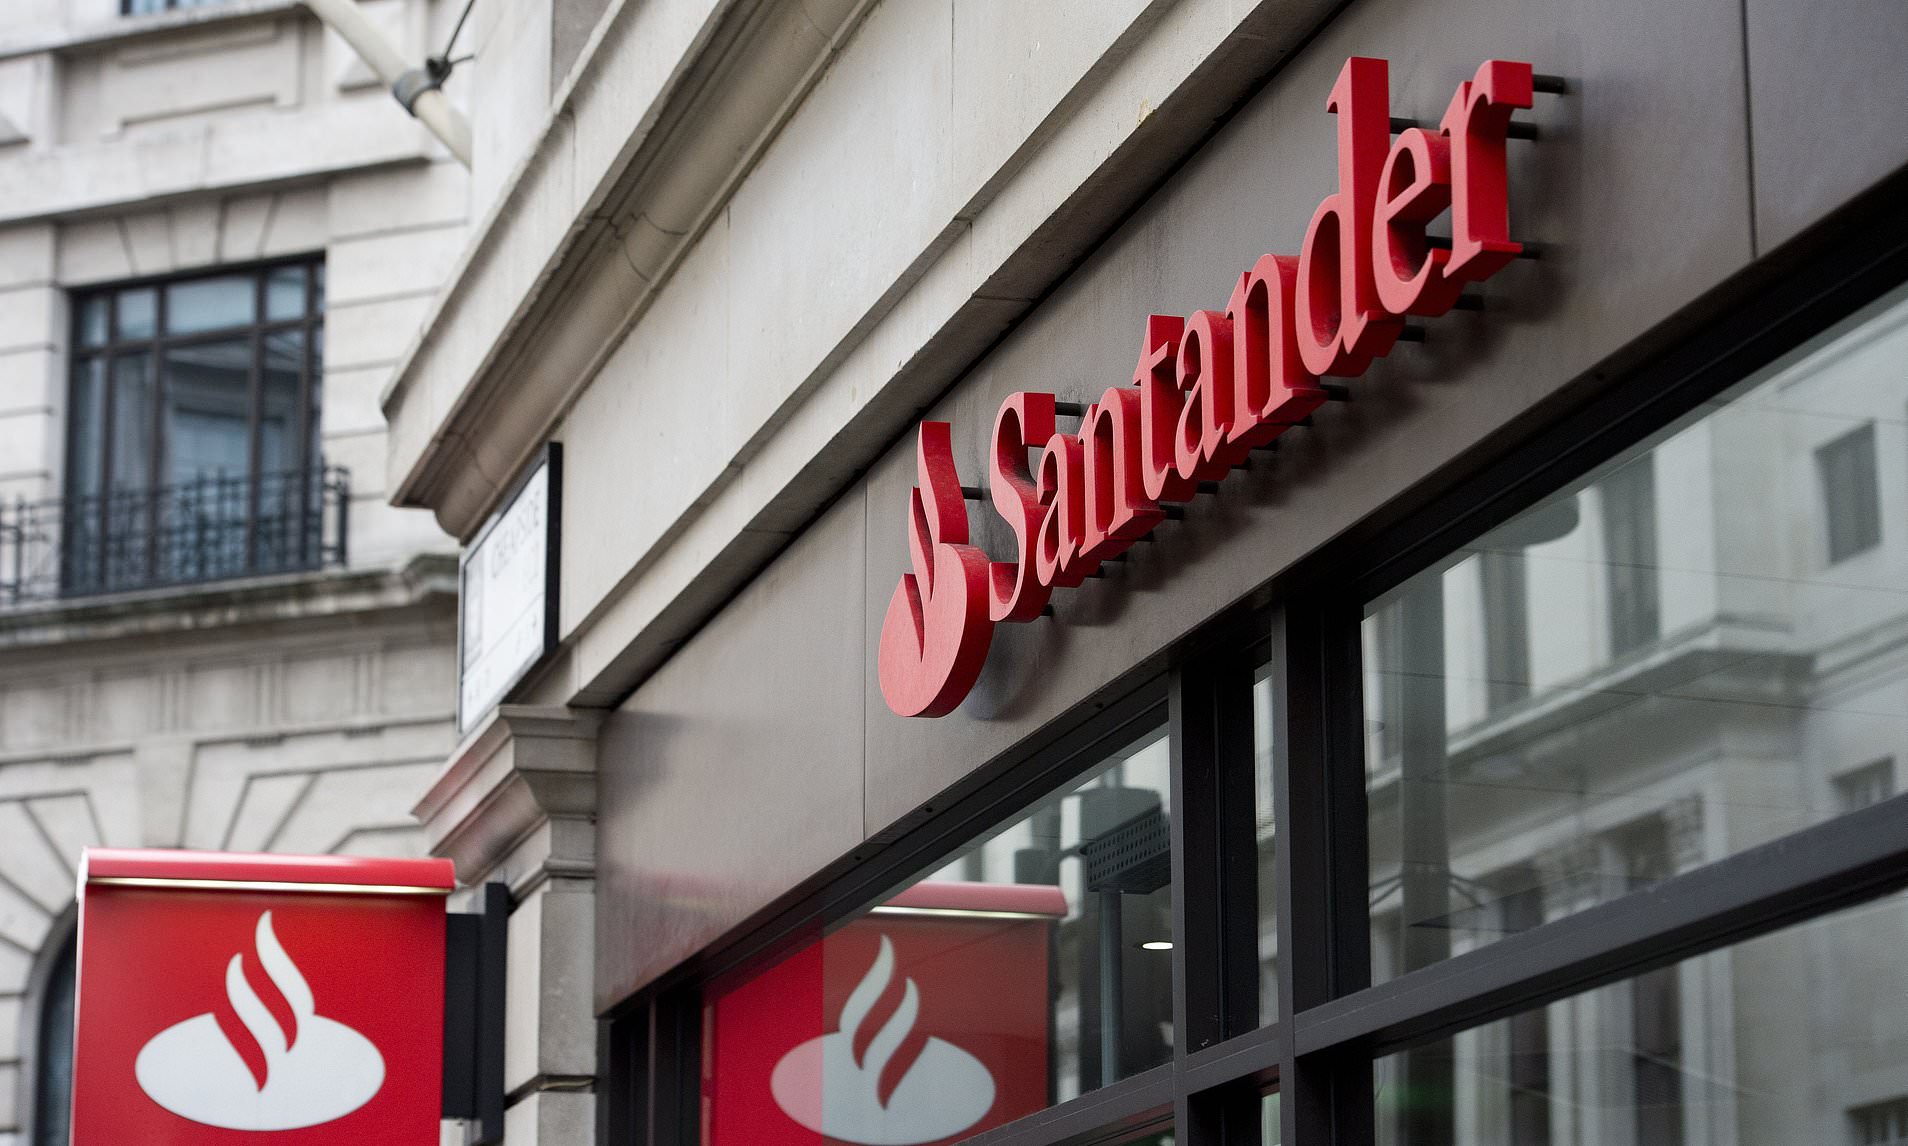 Banco Santander Indirect marketing